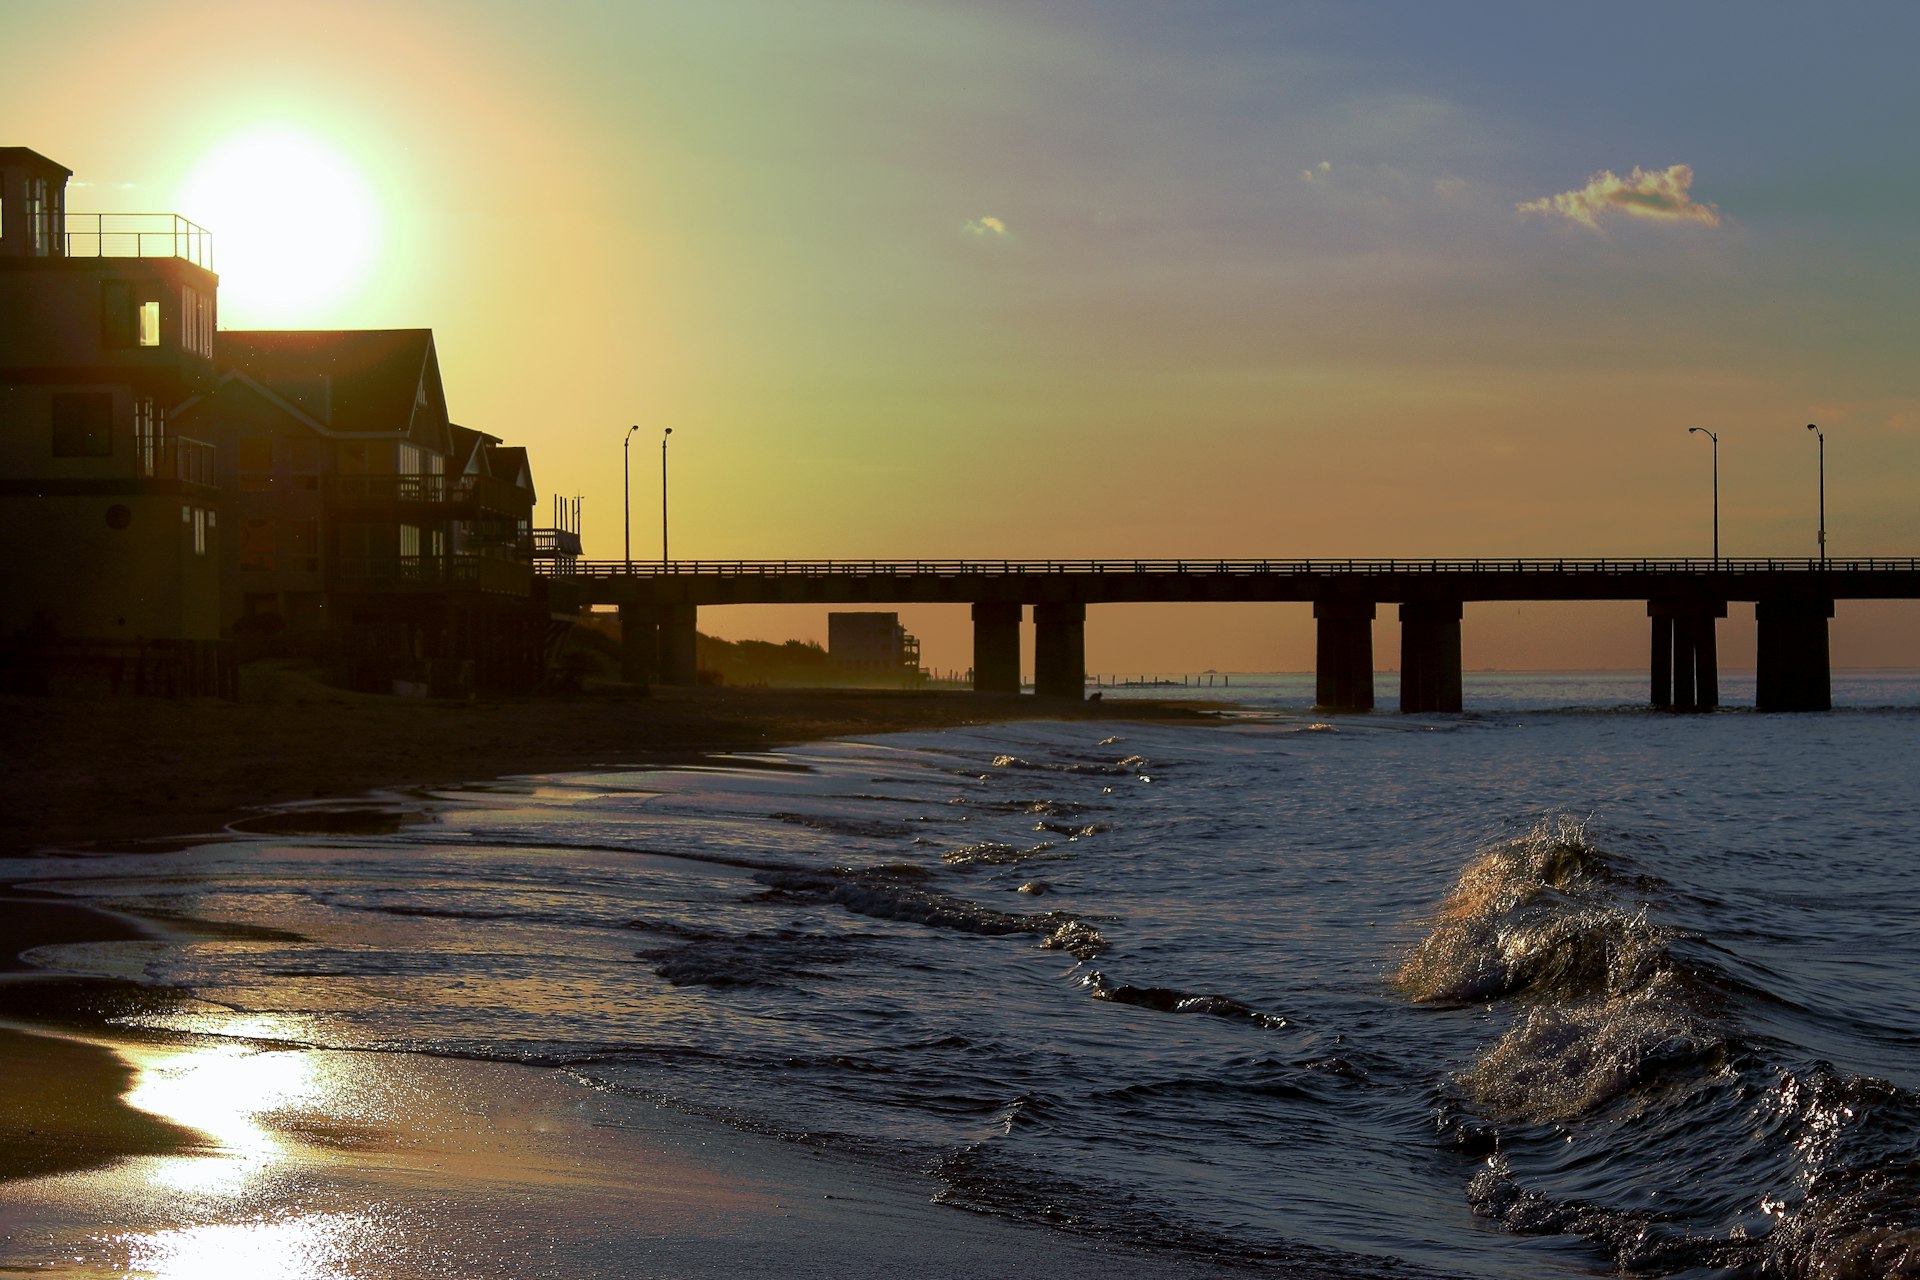 A beach scene with a bridge in the background